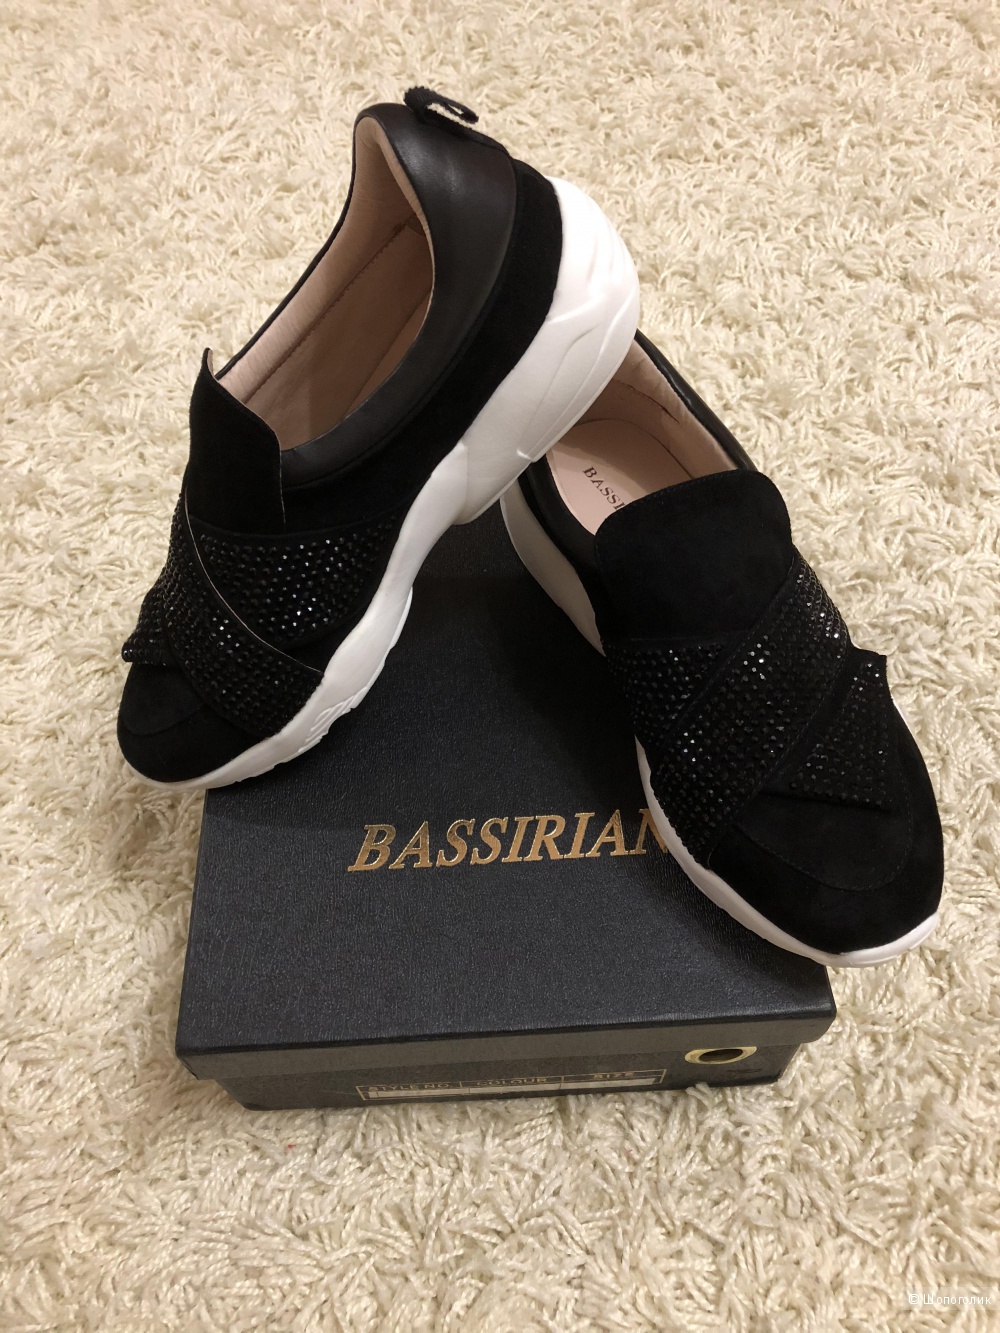 Кроссовки Bassariani 39 размер